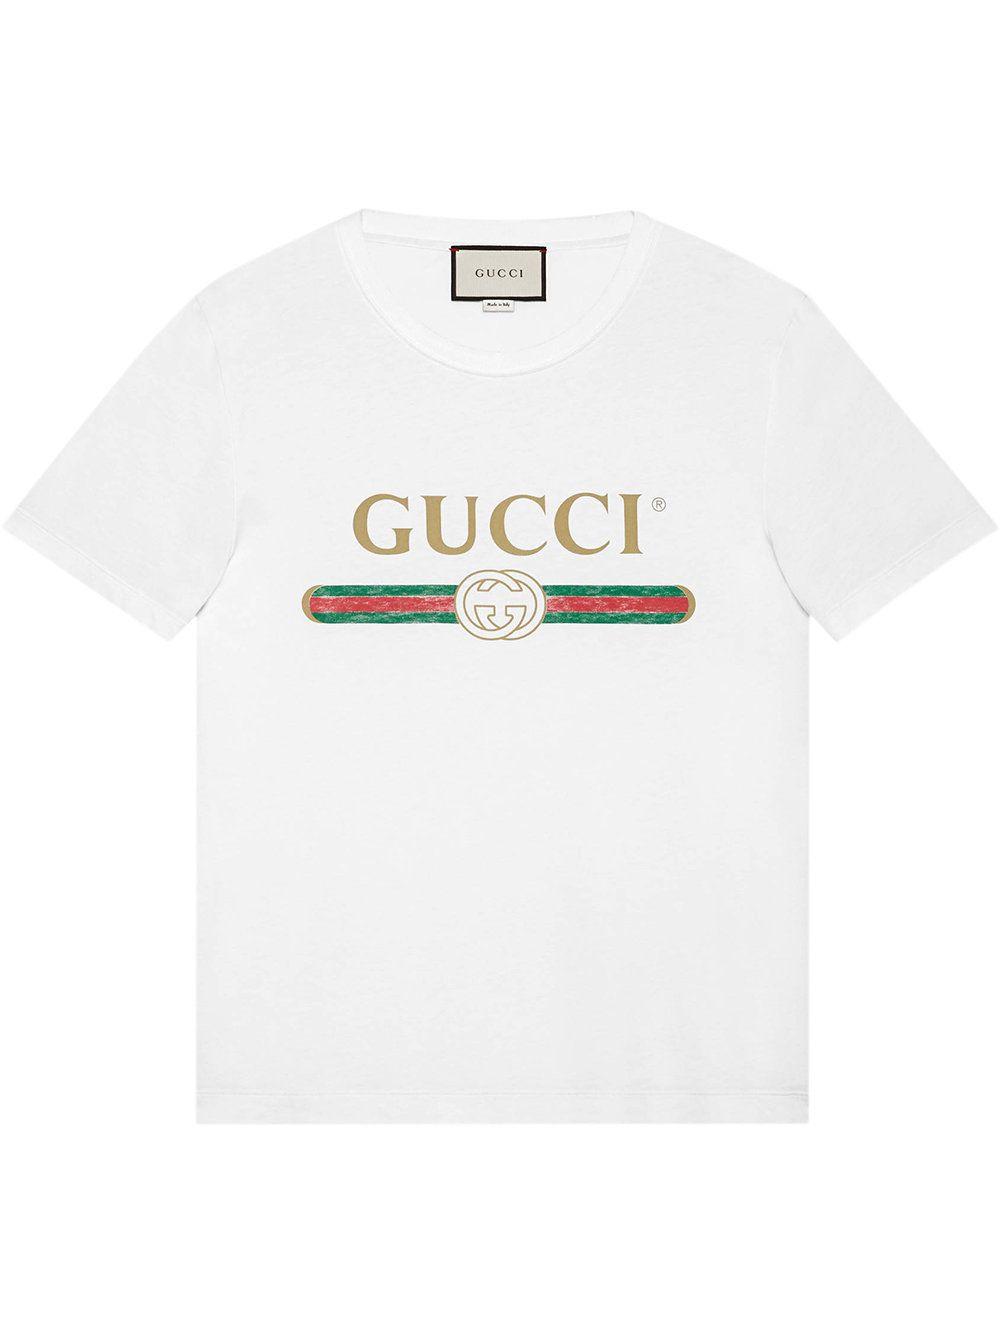 Black Red and Green Logo - Gucci Gucci Print T-Shirt 440103/X3F05 - 9045 BONE/BLACK/RED/GREEN ...